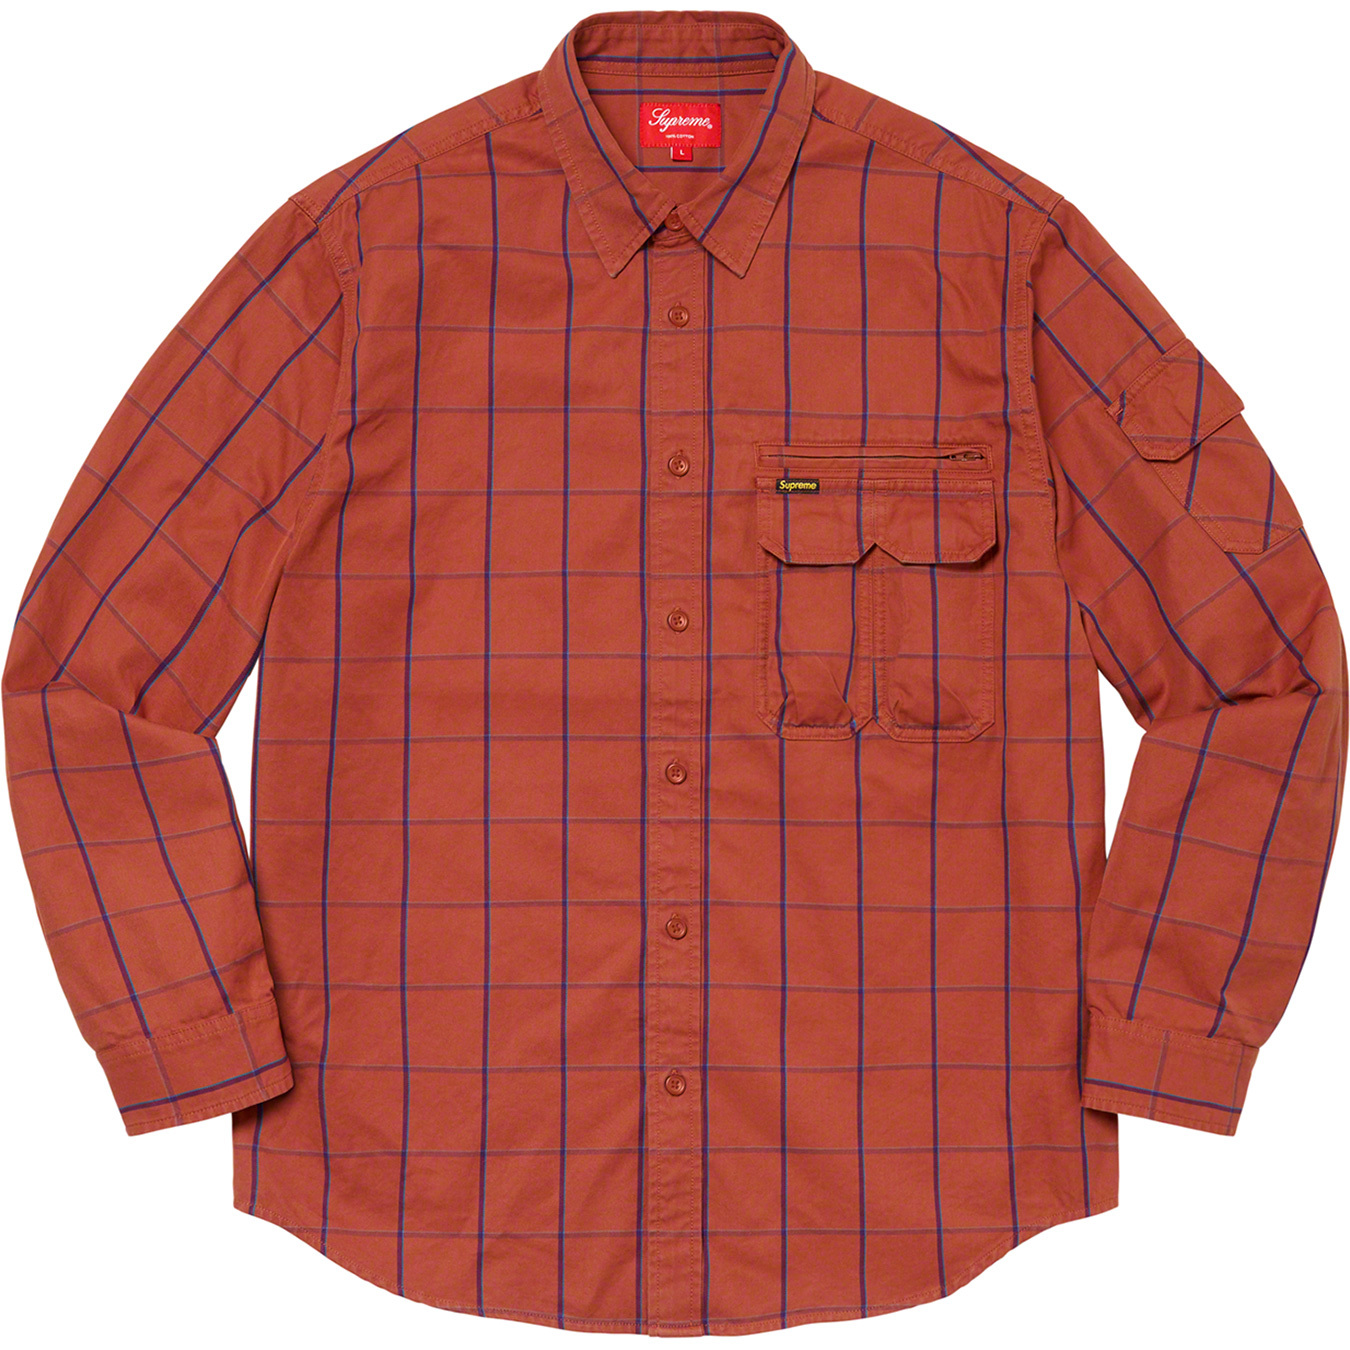 Twill Multi Pocket Shirt - fall winter 2020 - Supreme